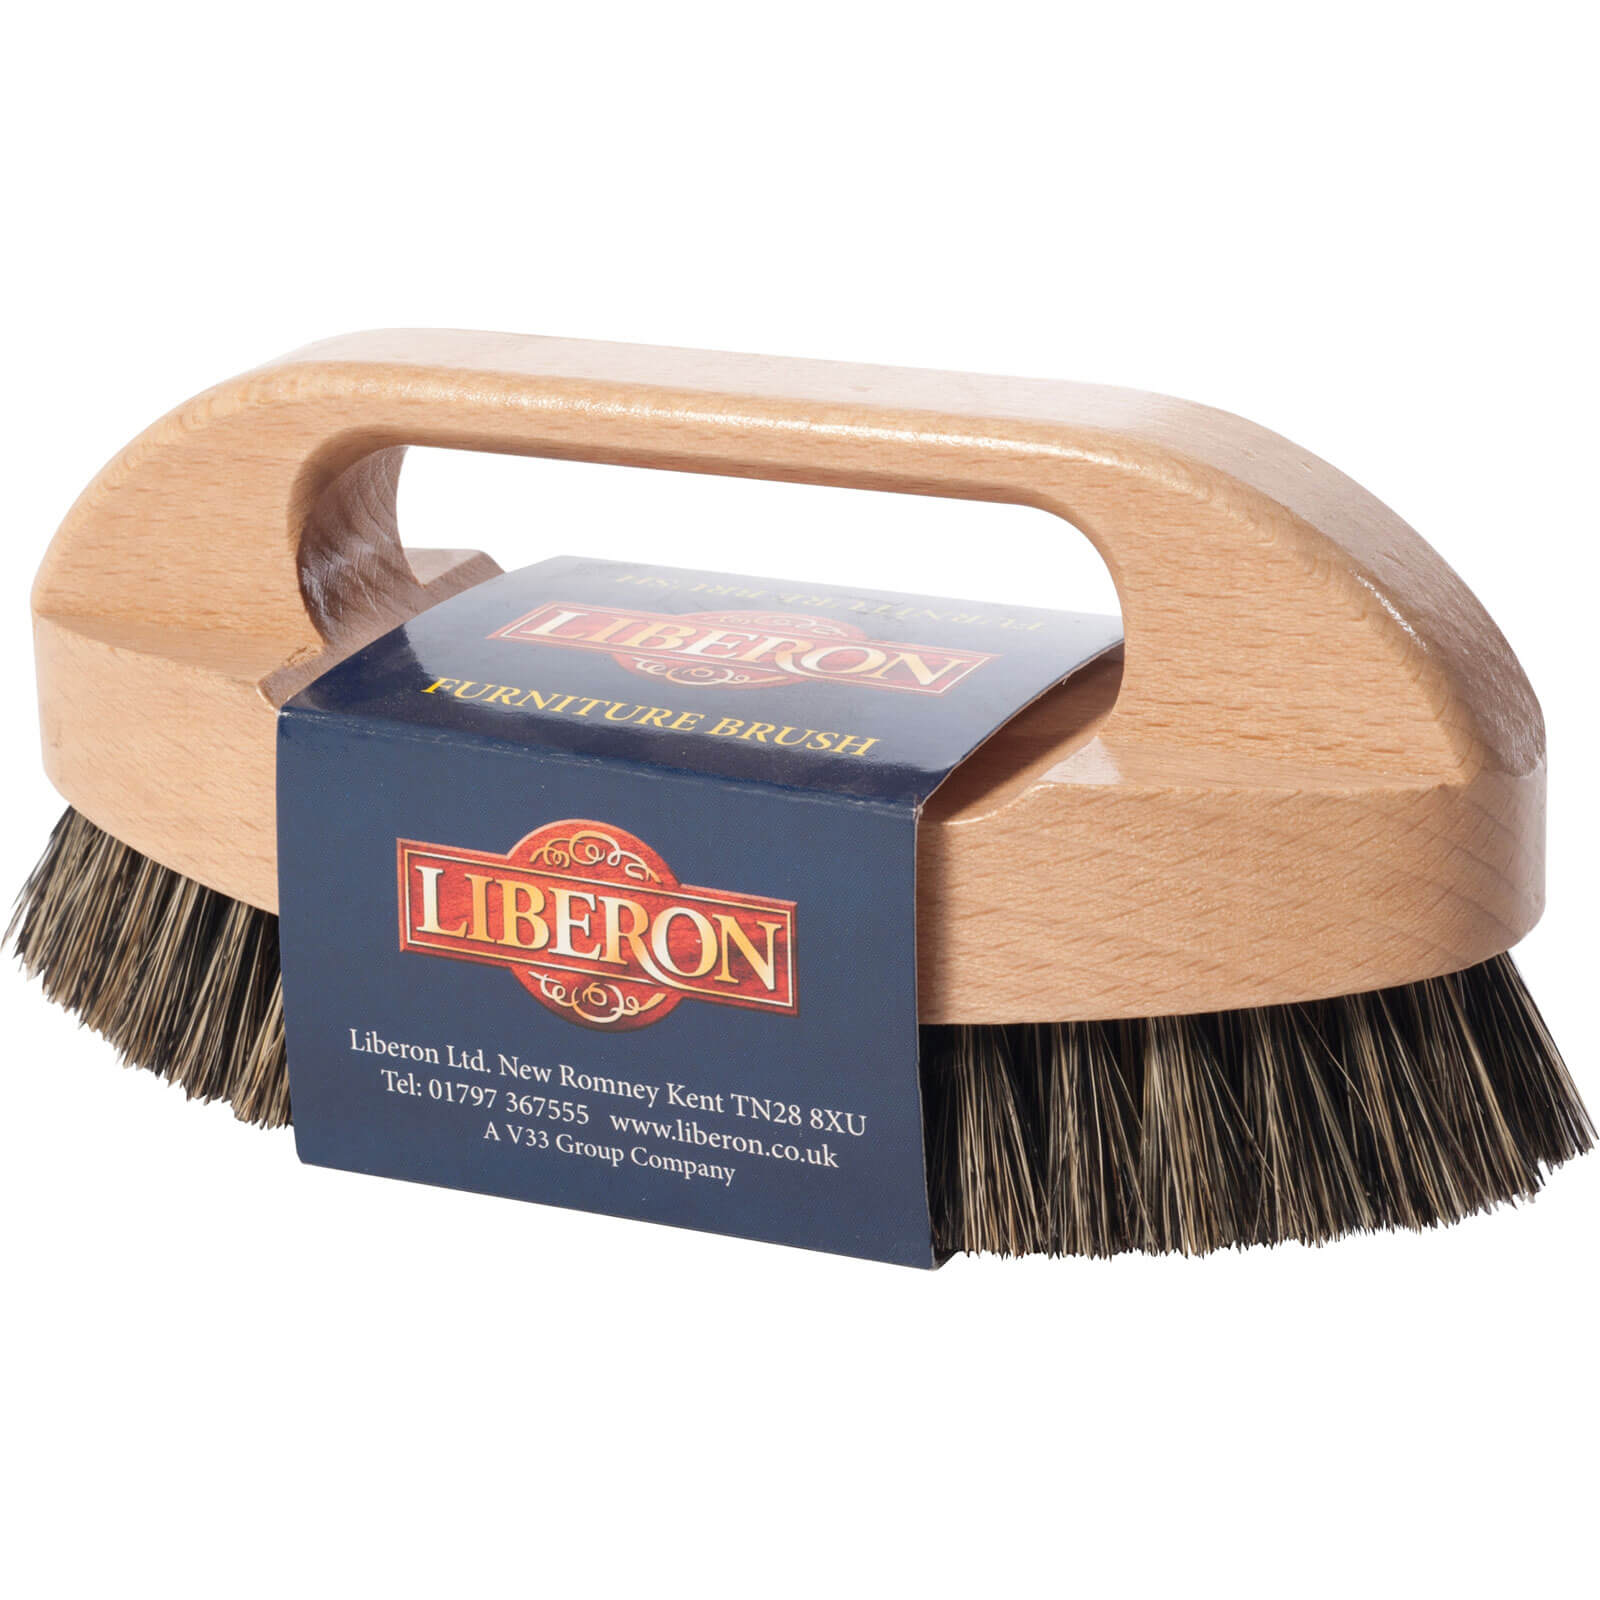 Photo of Liberon Furniture Brush